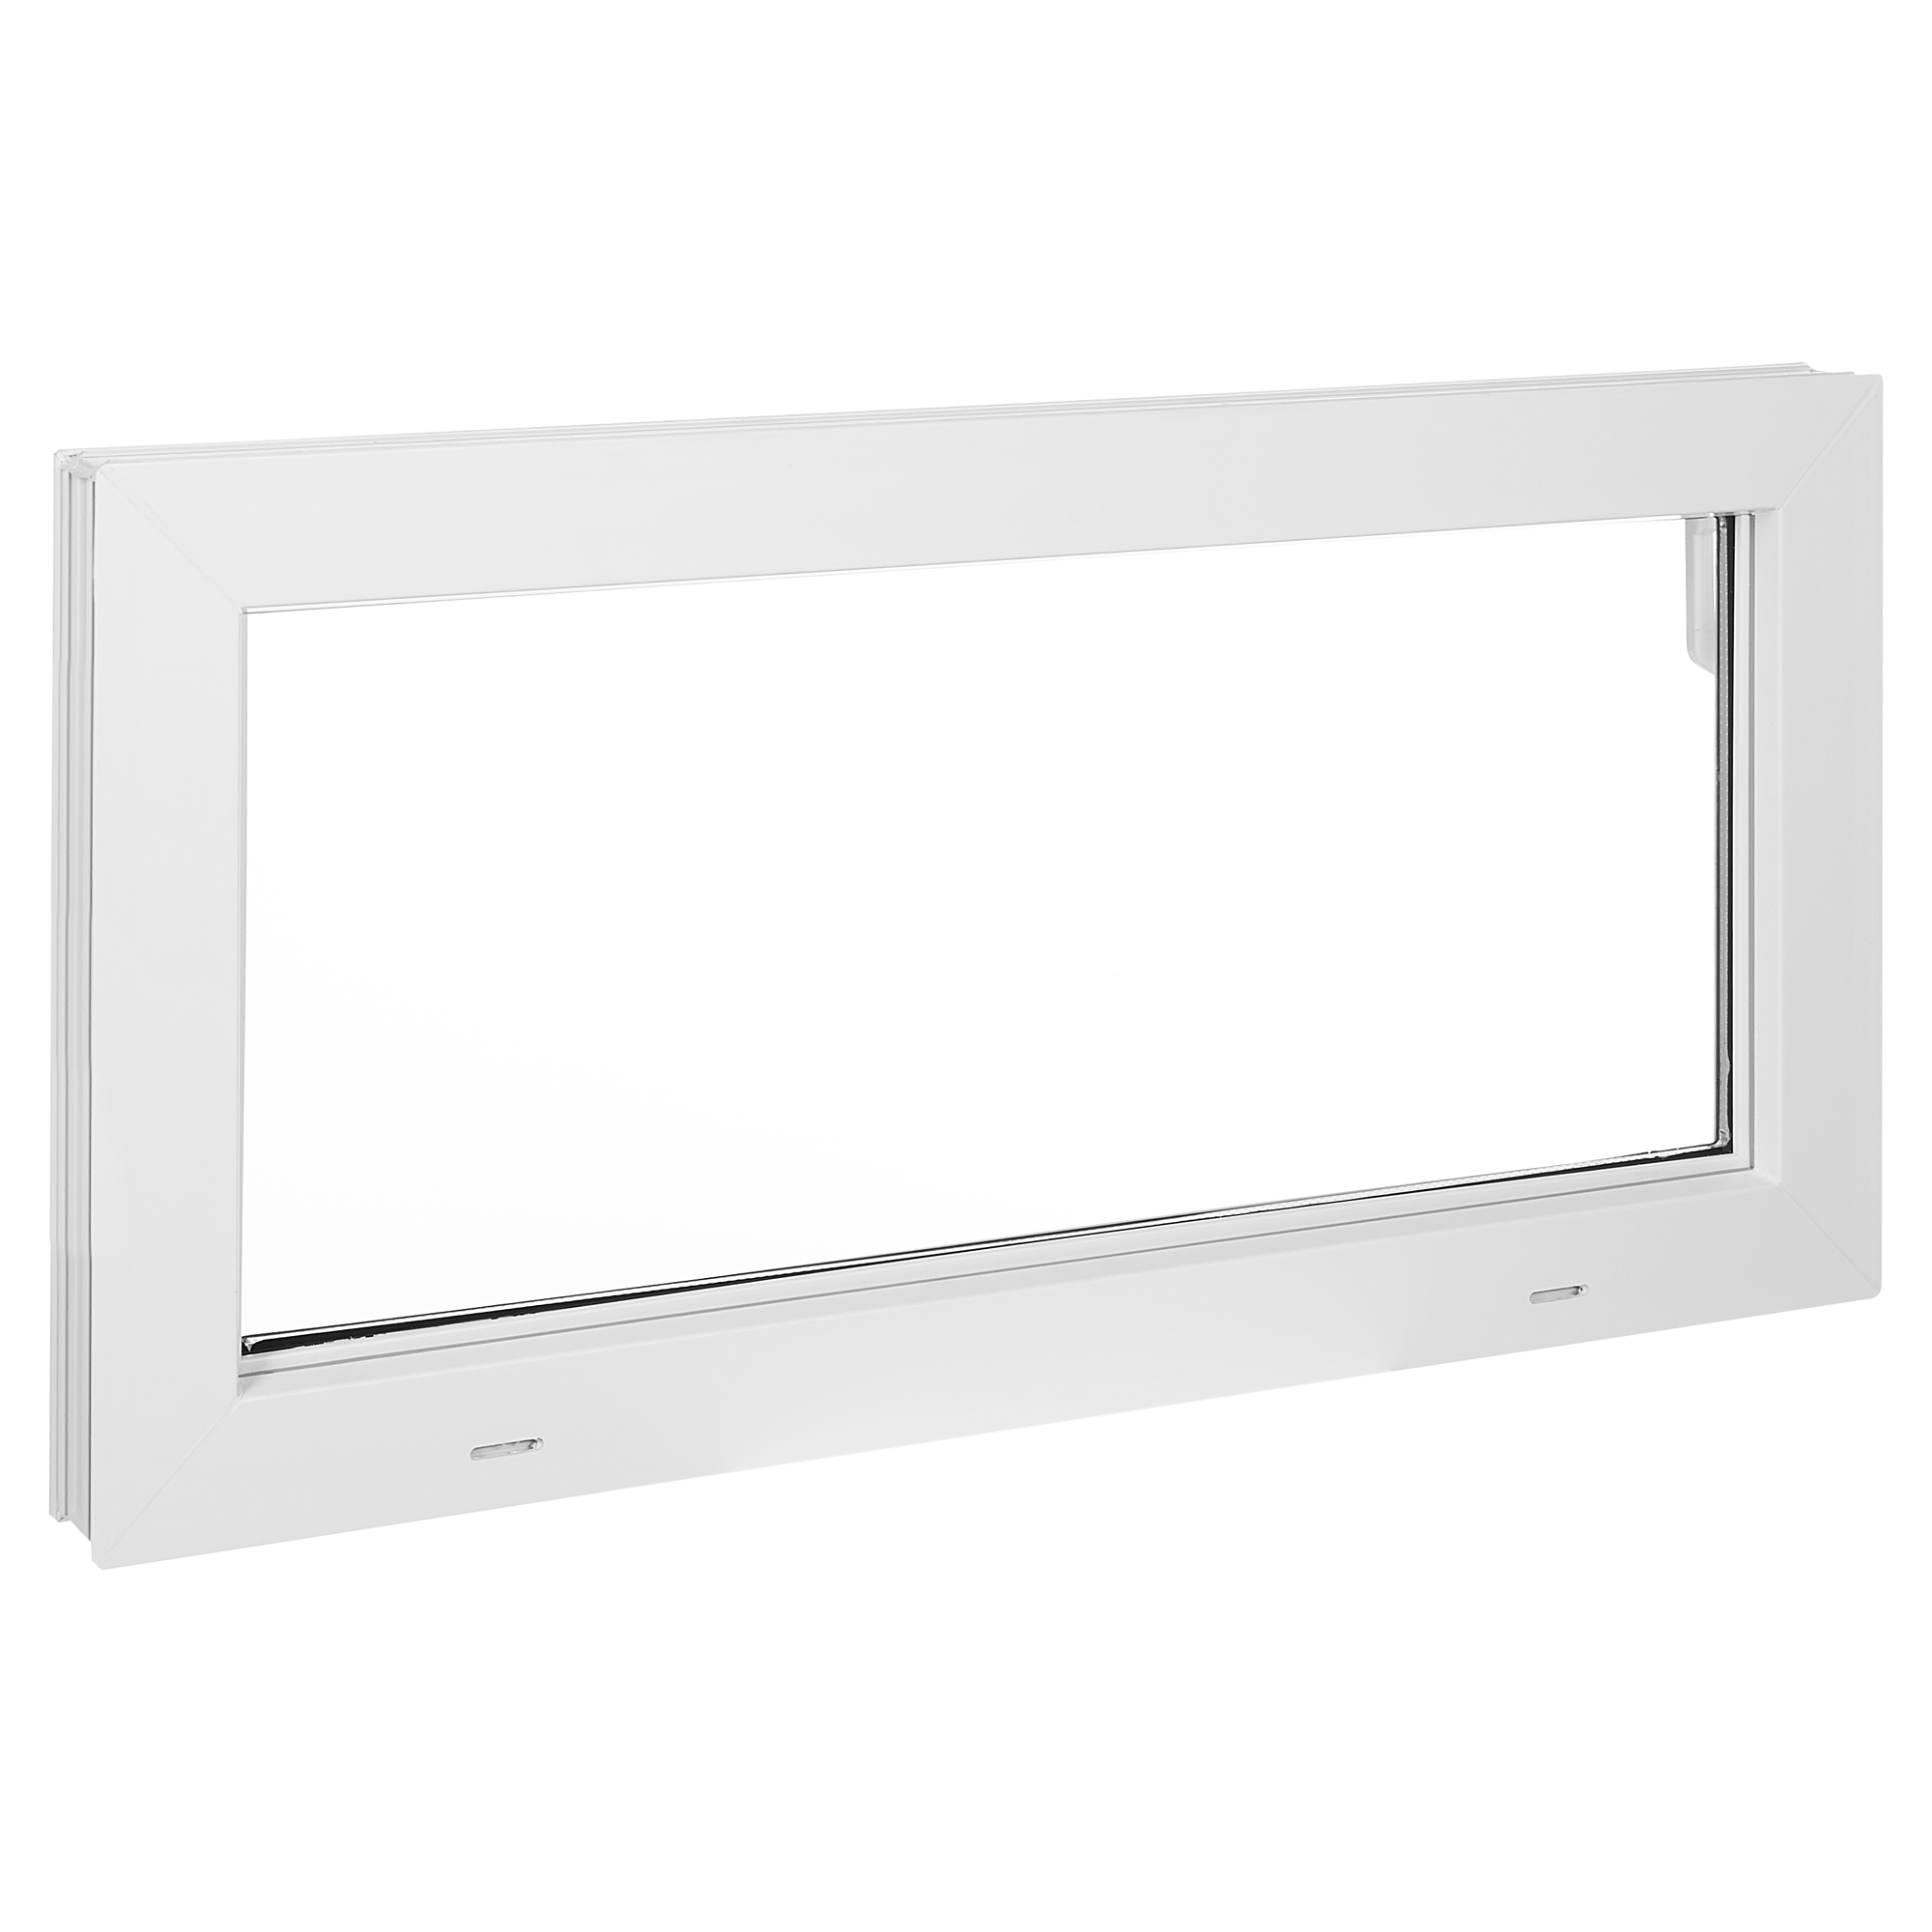 Kippfenster weiß 1-flügelig 80 x 40 cm + product picture